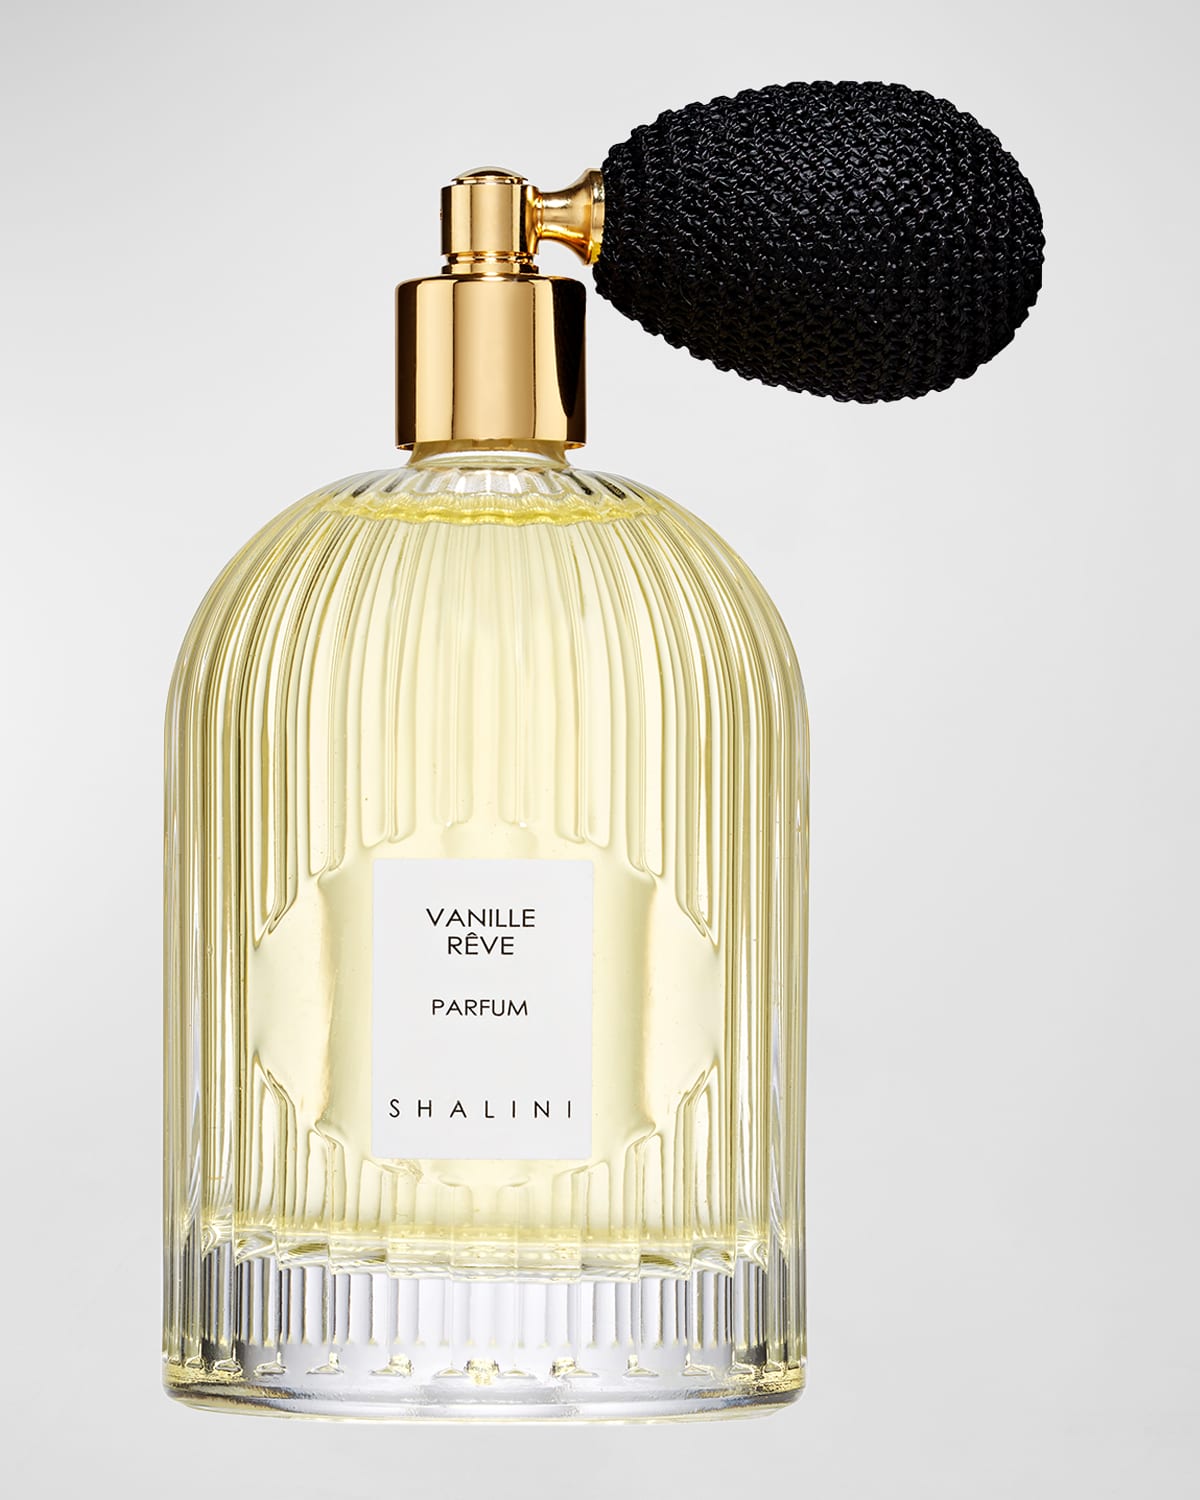 Vanille Reve Parfum in Byzantine Glass Flacon with Black Bulb Atomizer, 3.4 oz./ 100 mL